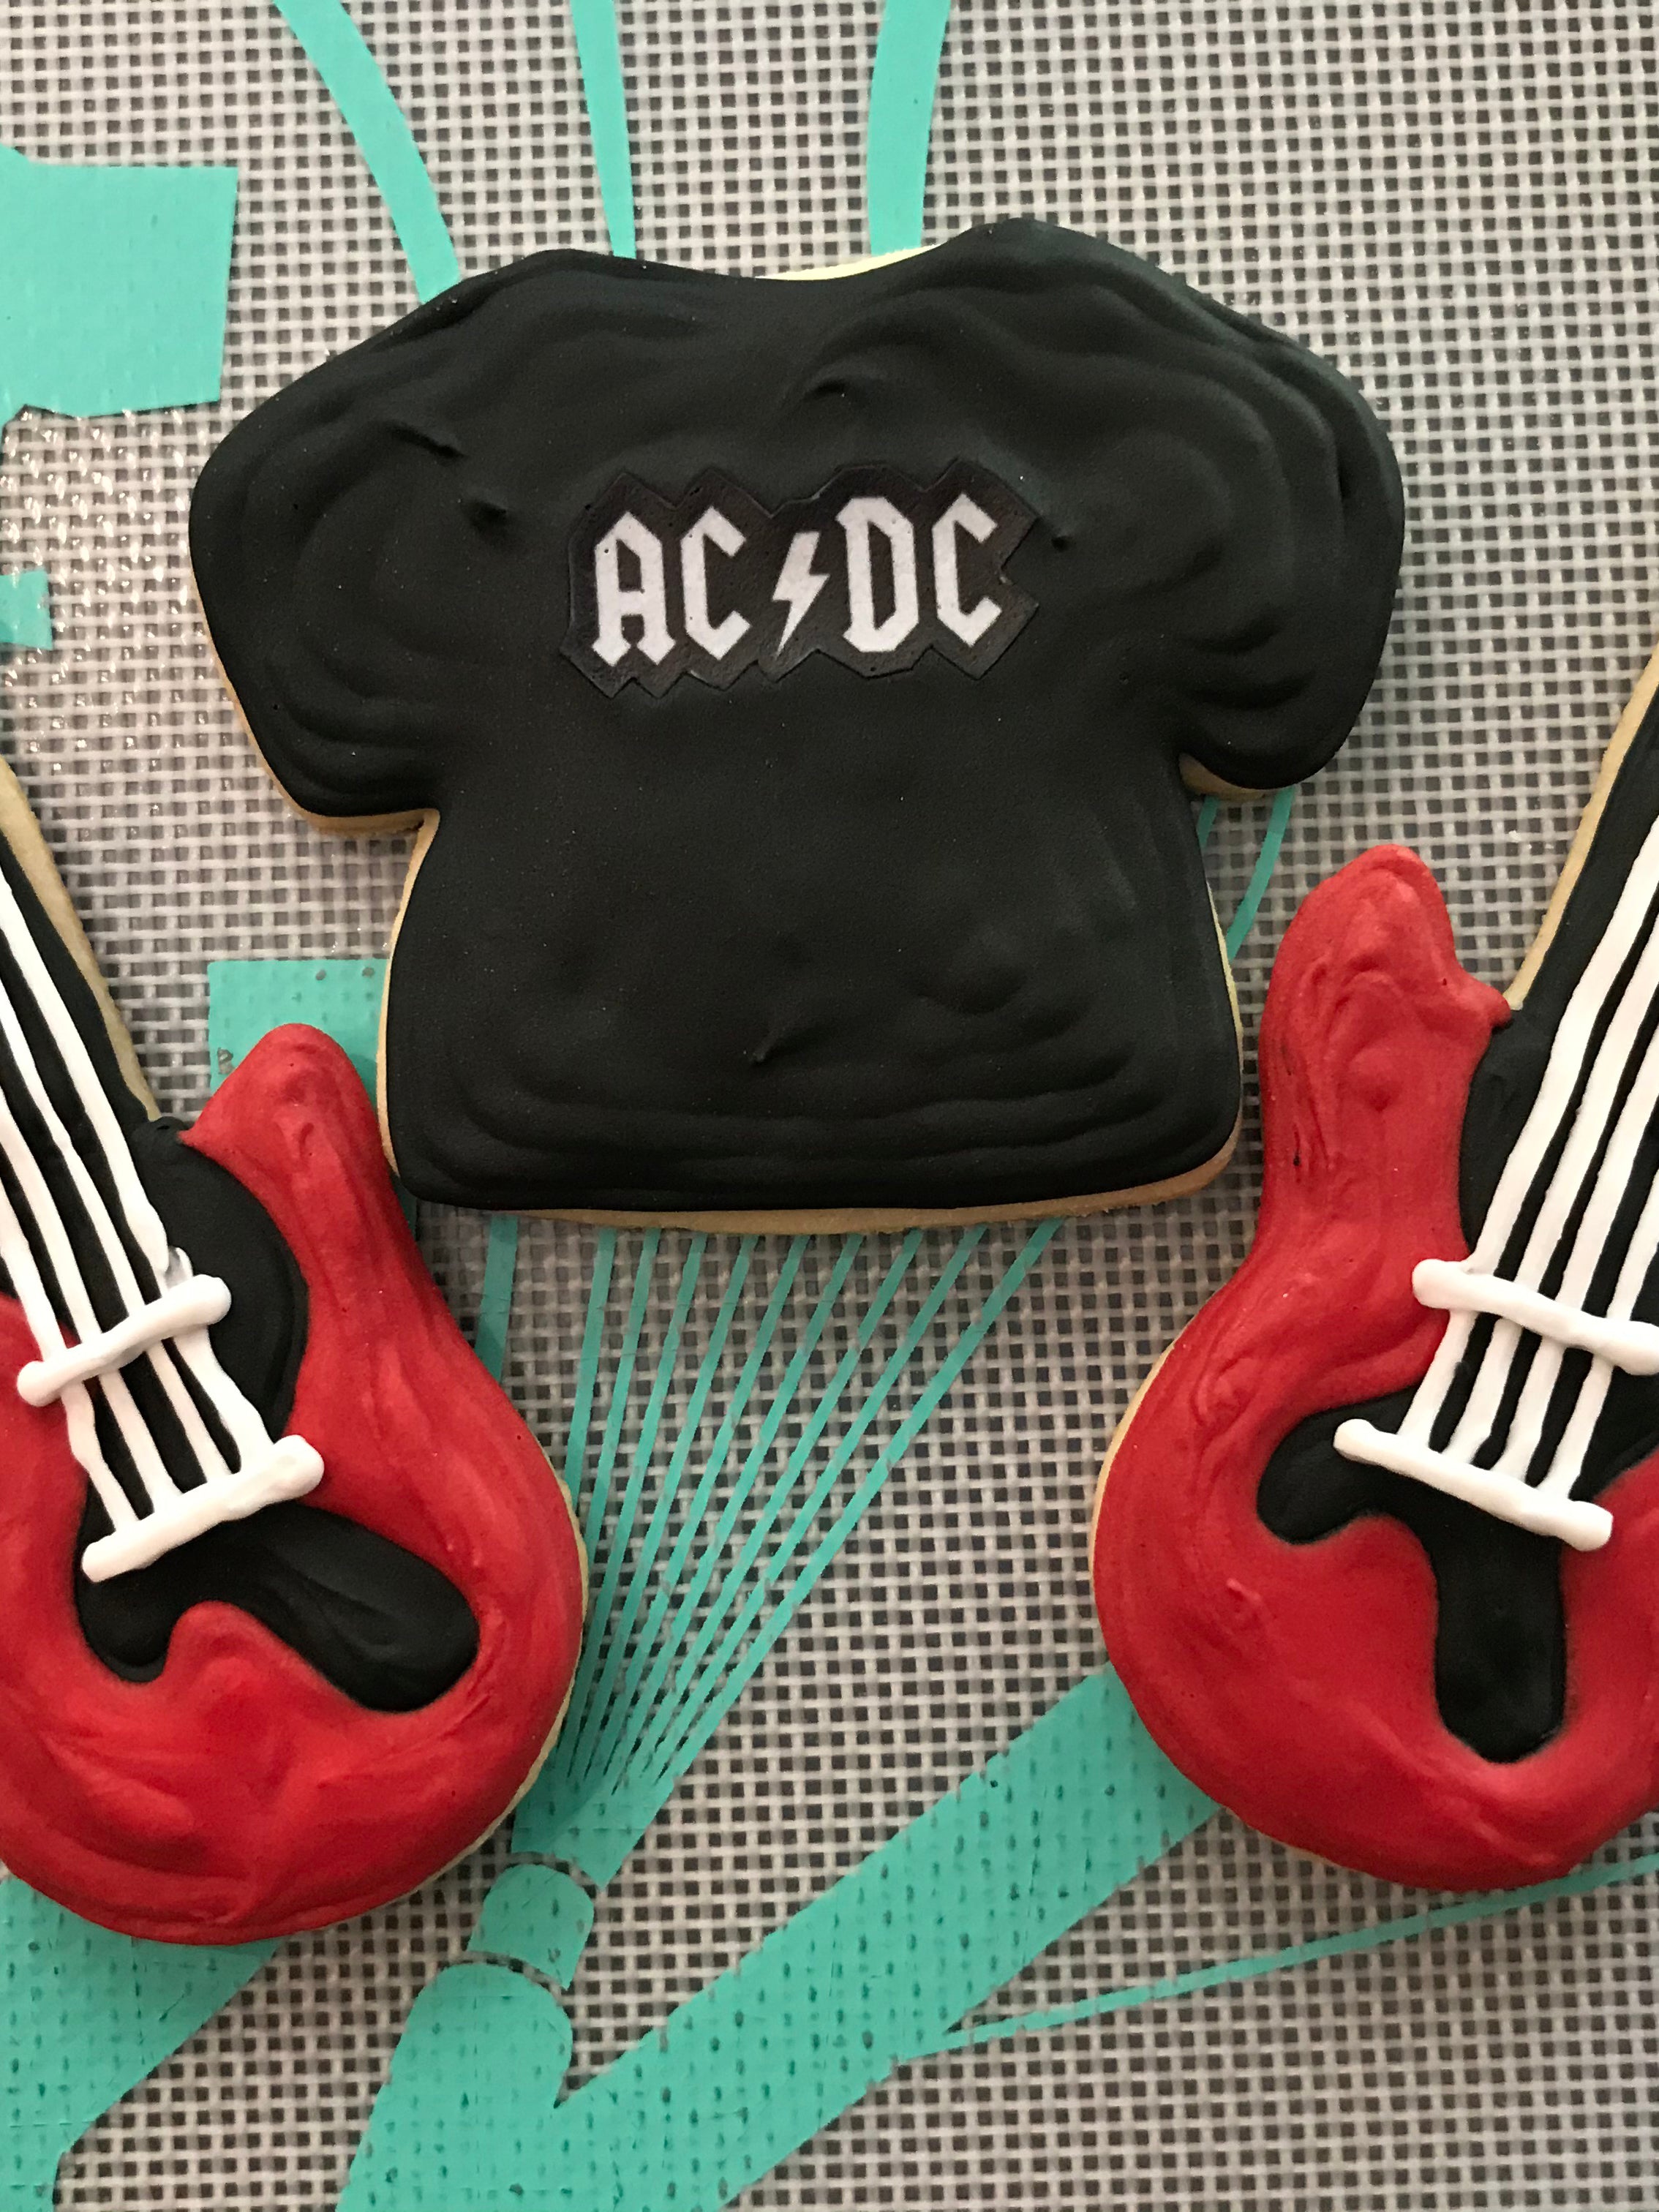 ACDC Cookies